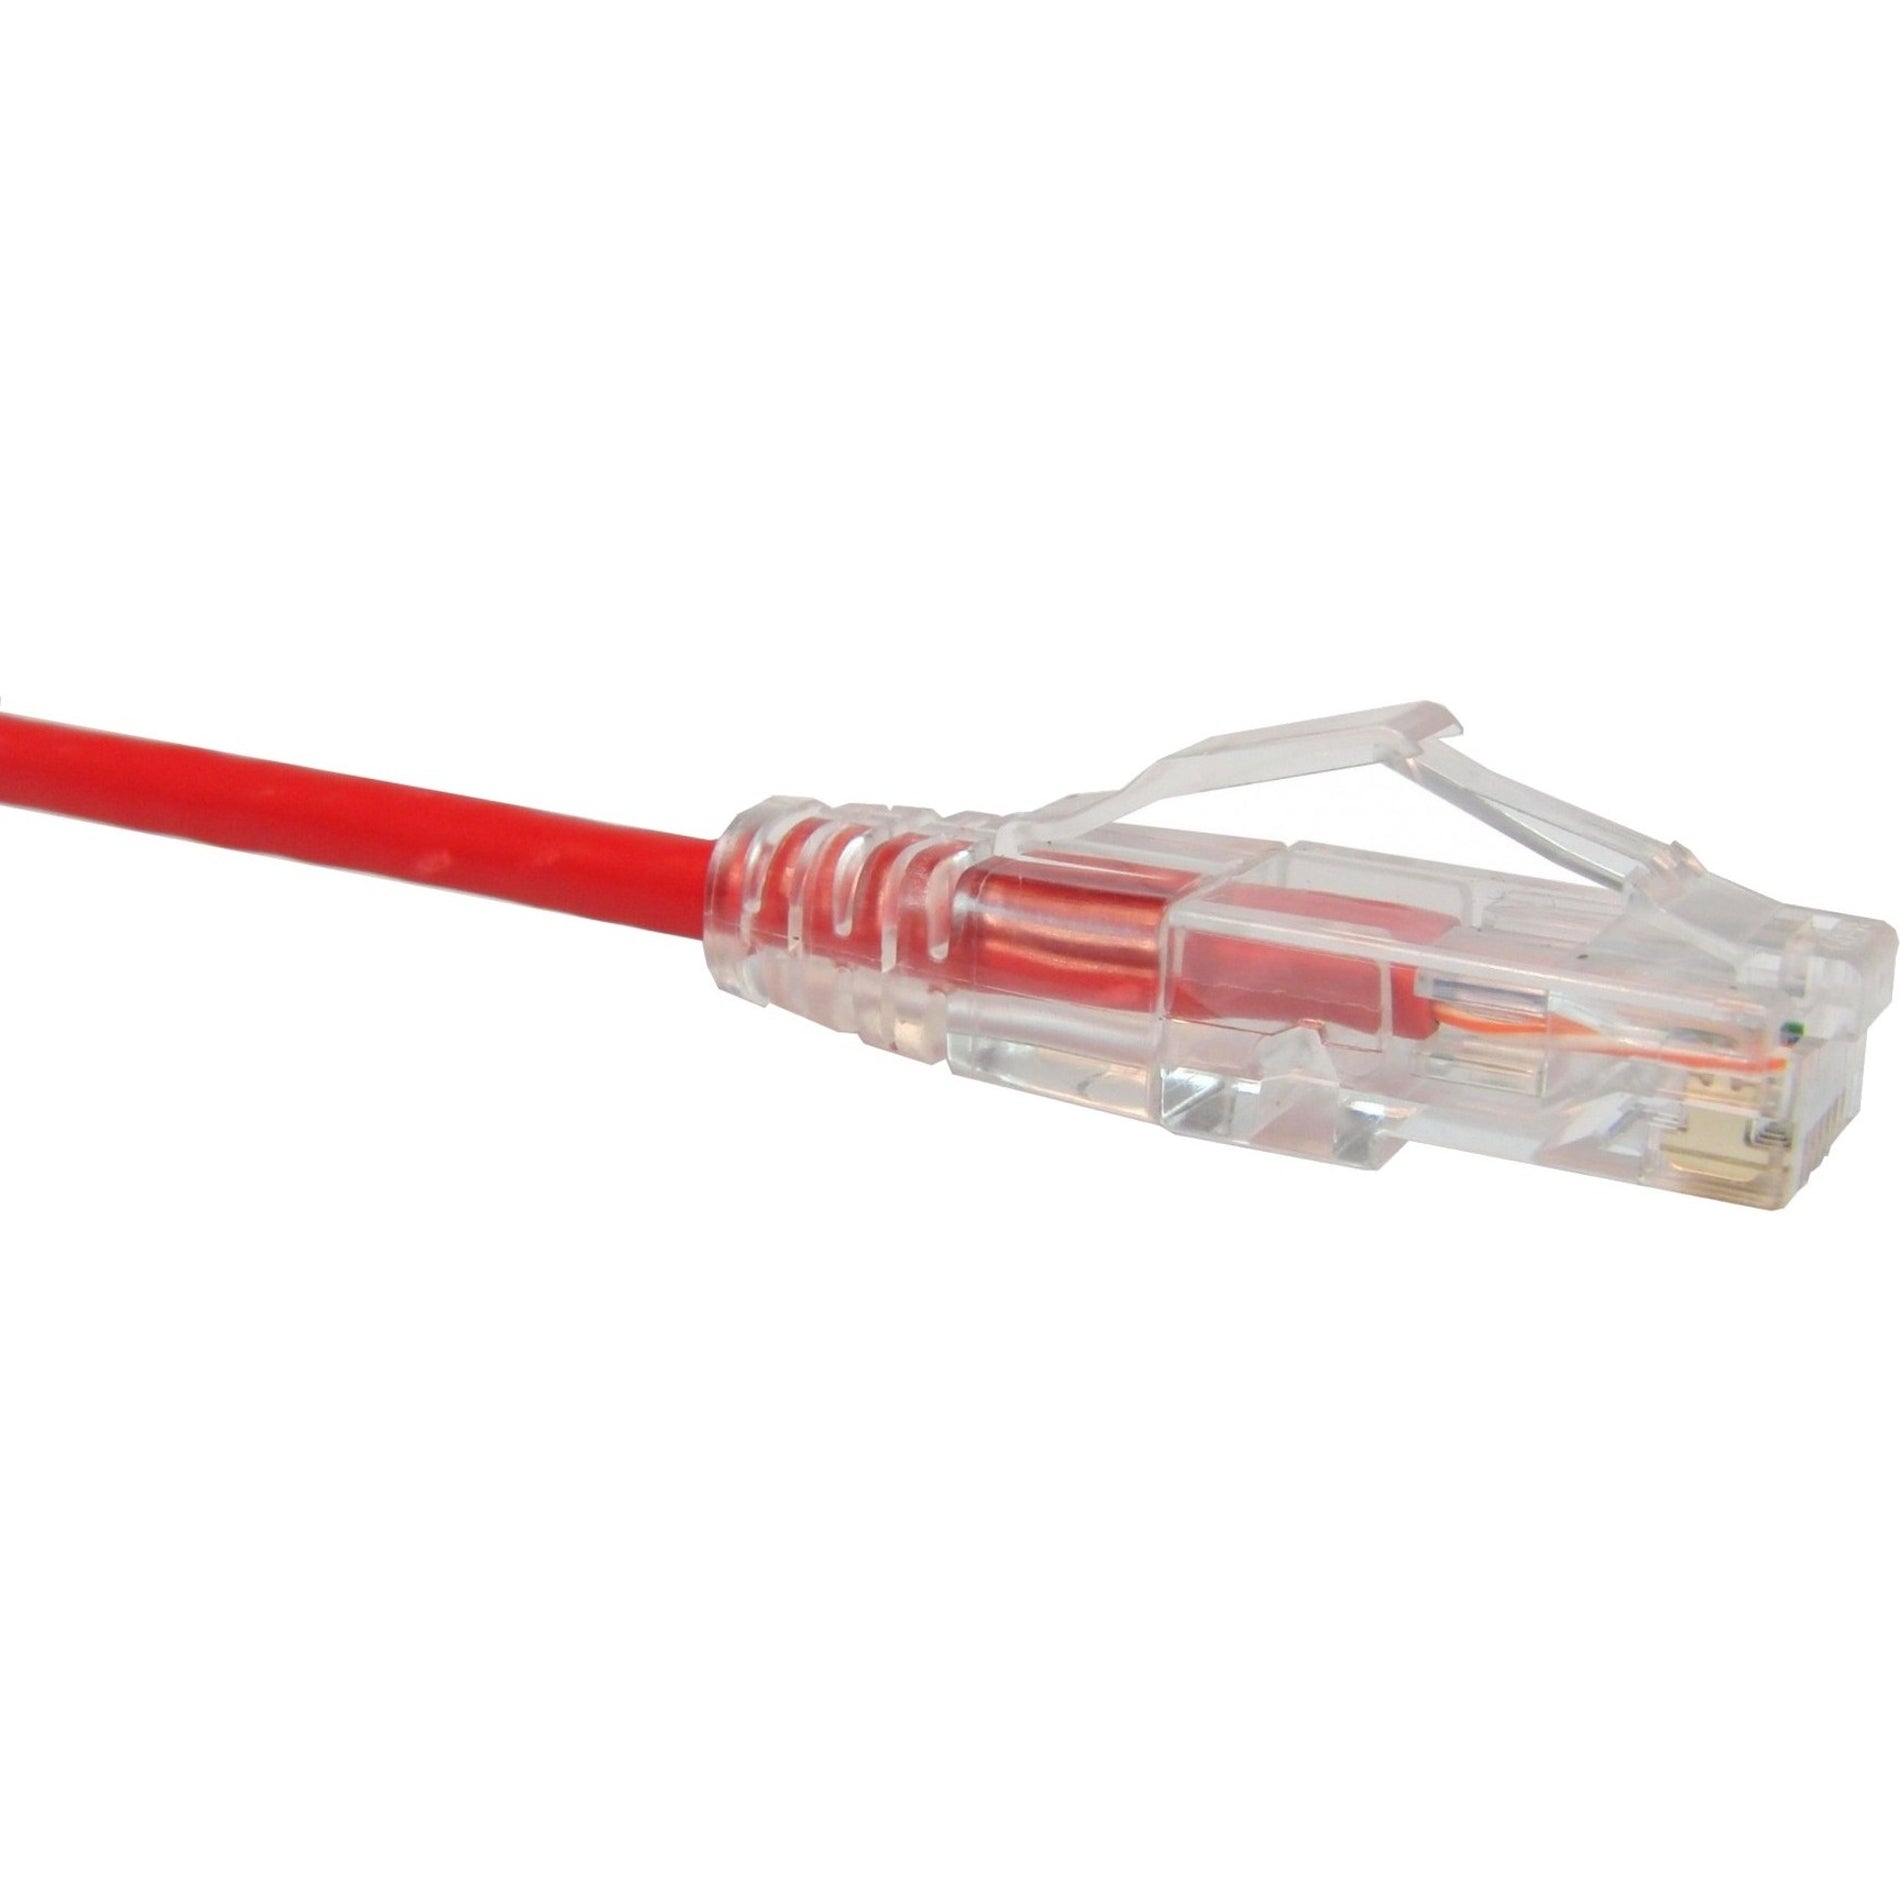 Unirise CS6-01F-RED Clearfit Slim Cat6 Patch Cable 1ft Red Snagless 1英尺红色，无卡扣款式，适配型Cat6超薄布线插头电缆 - 红色